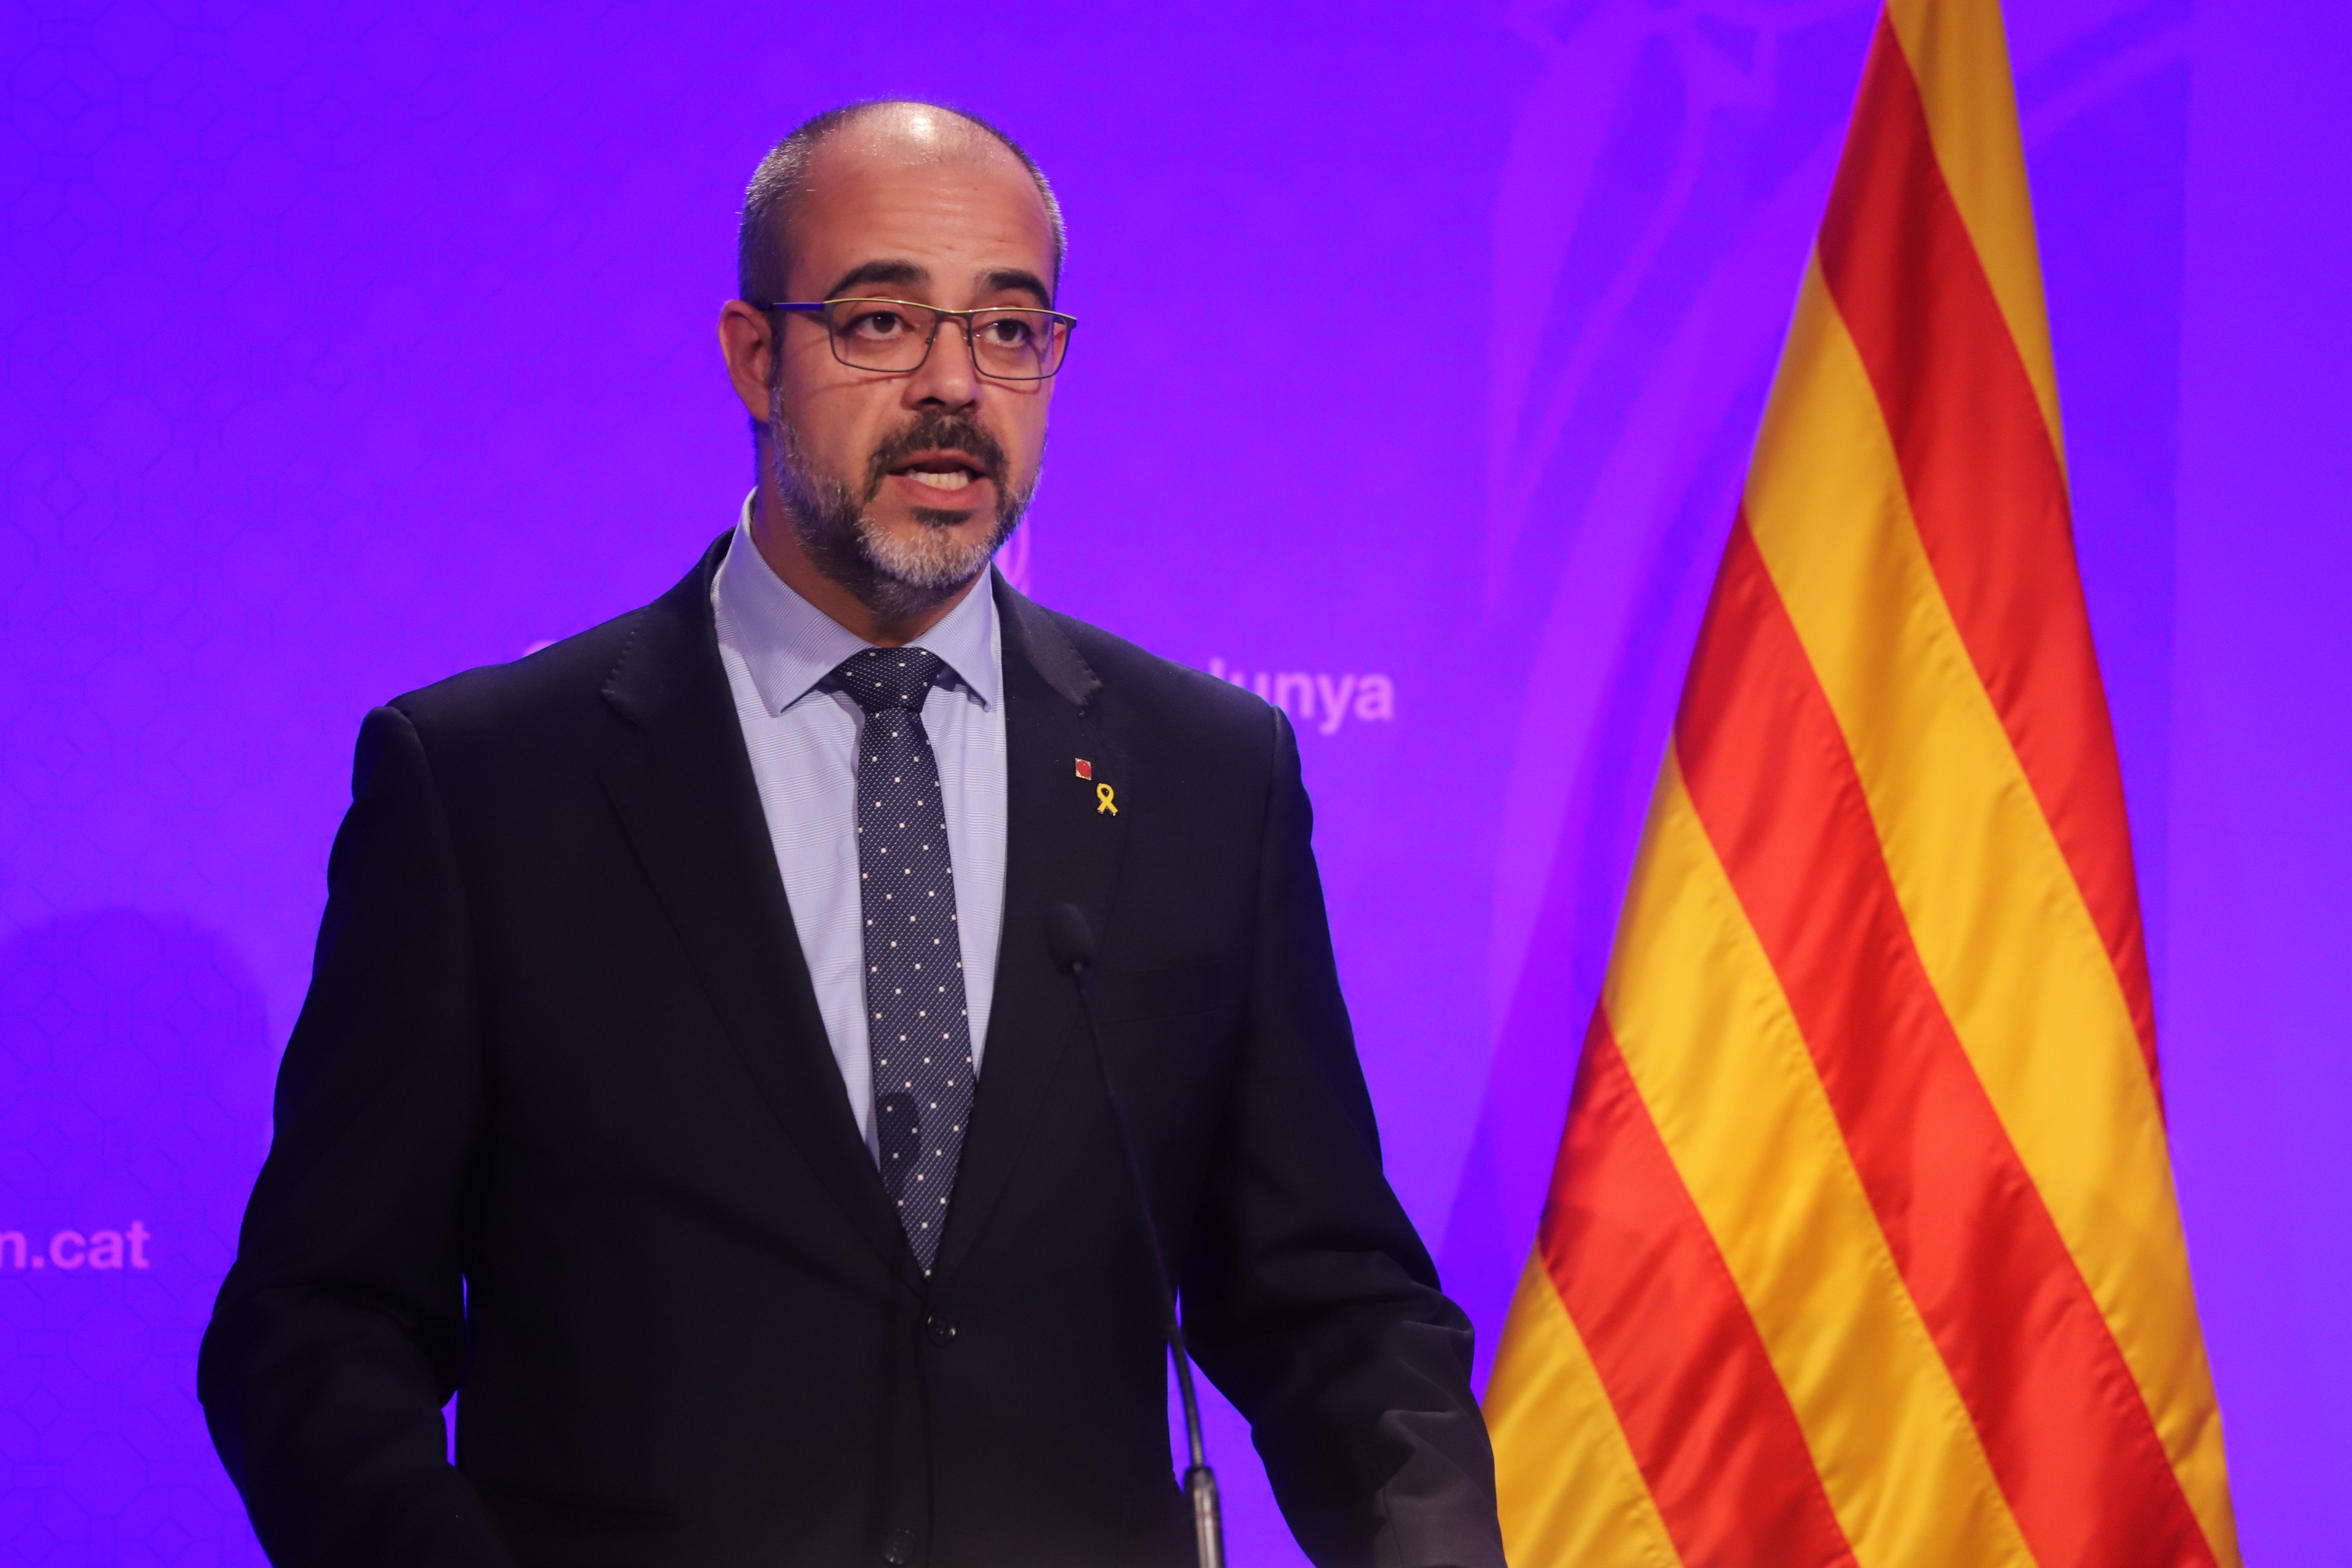 Buch: "El govern espanyol prefereix subordinar-nos abans que treballar junts"